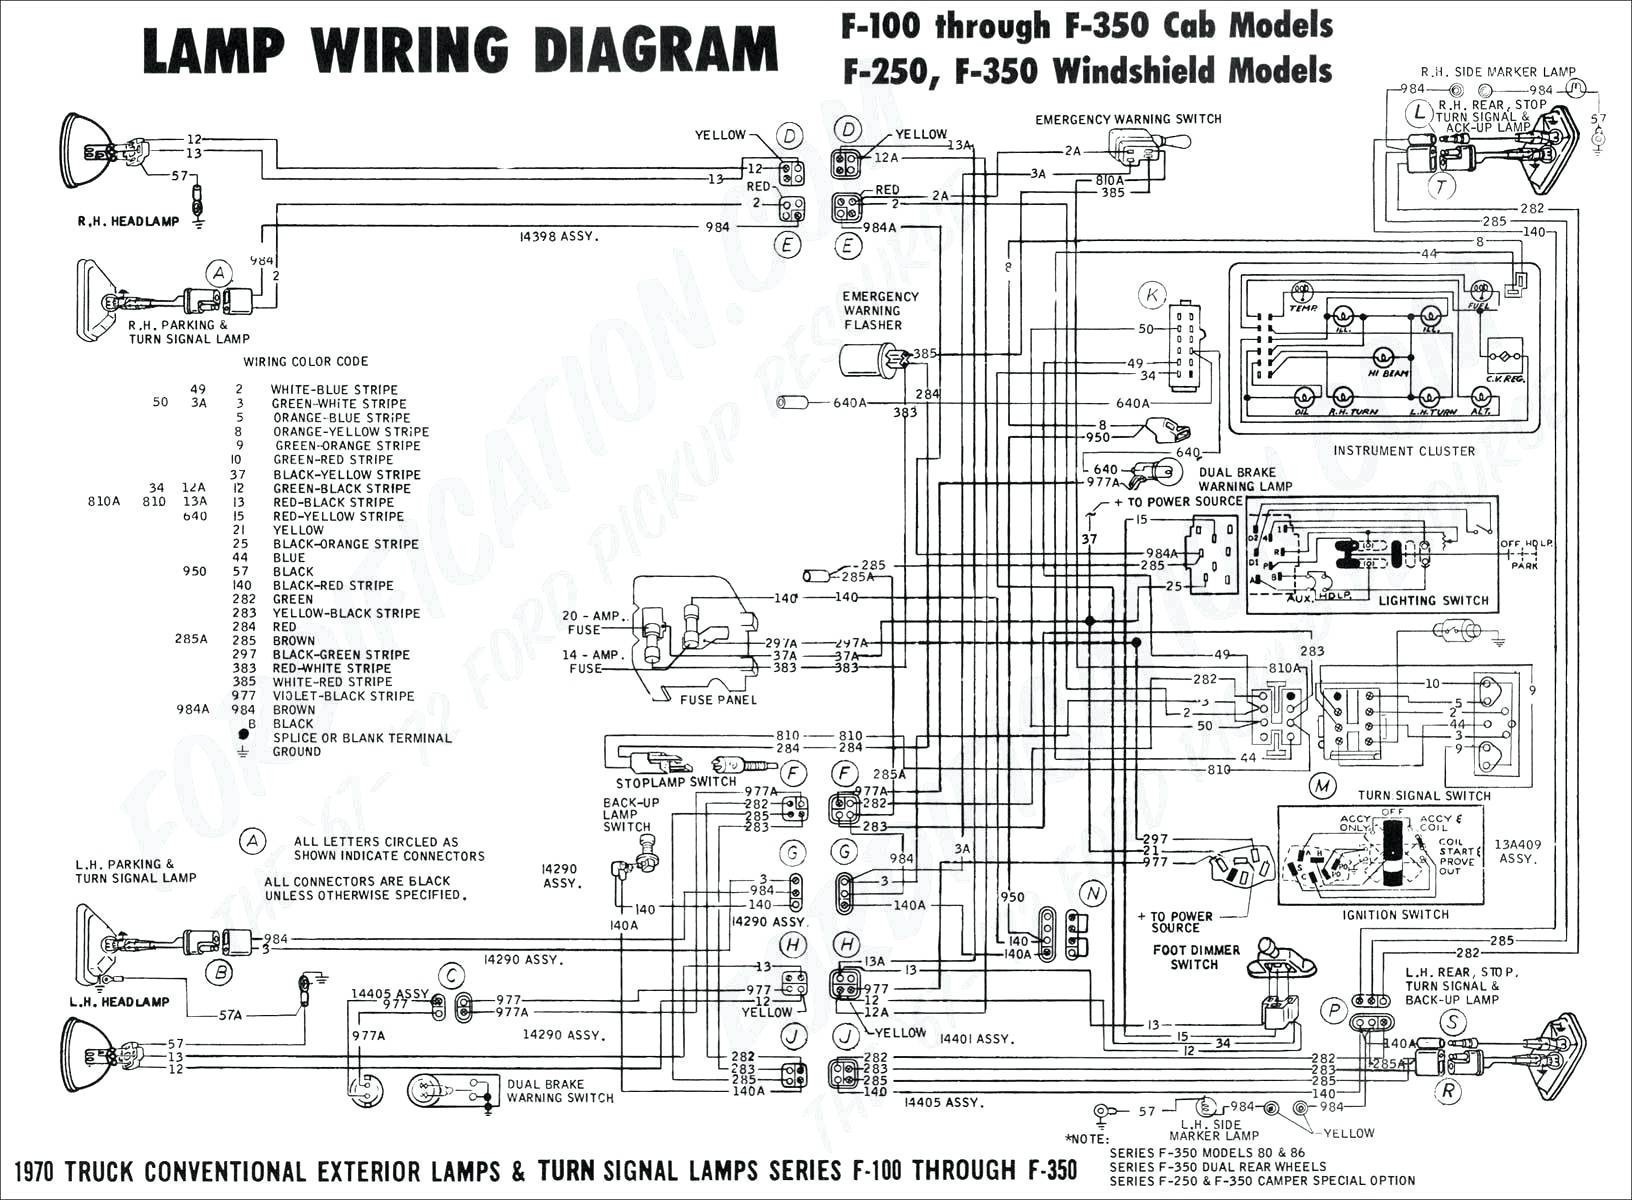 Honda Beat Motorcycle Wiring Diagram Fresh Simple Y Plan Wiring Diagram Refrence Wiring Diagram Honda Beat